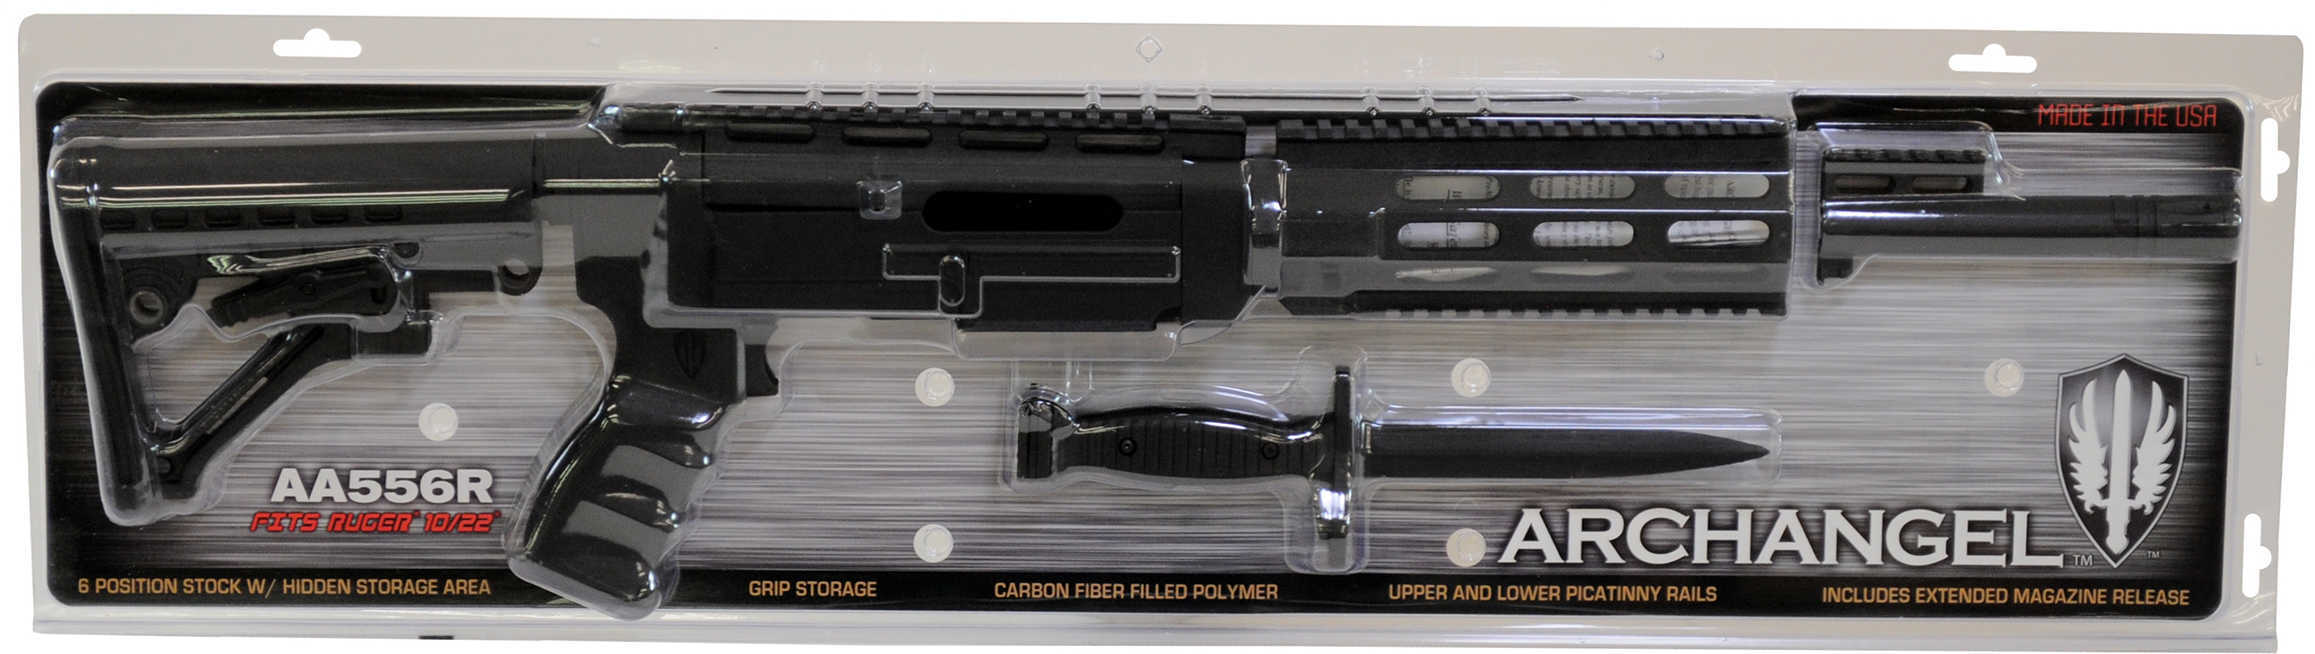 Archangel AA556R ARS Rifle Black Conversion Kit